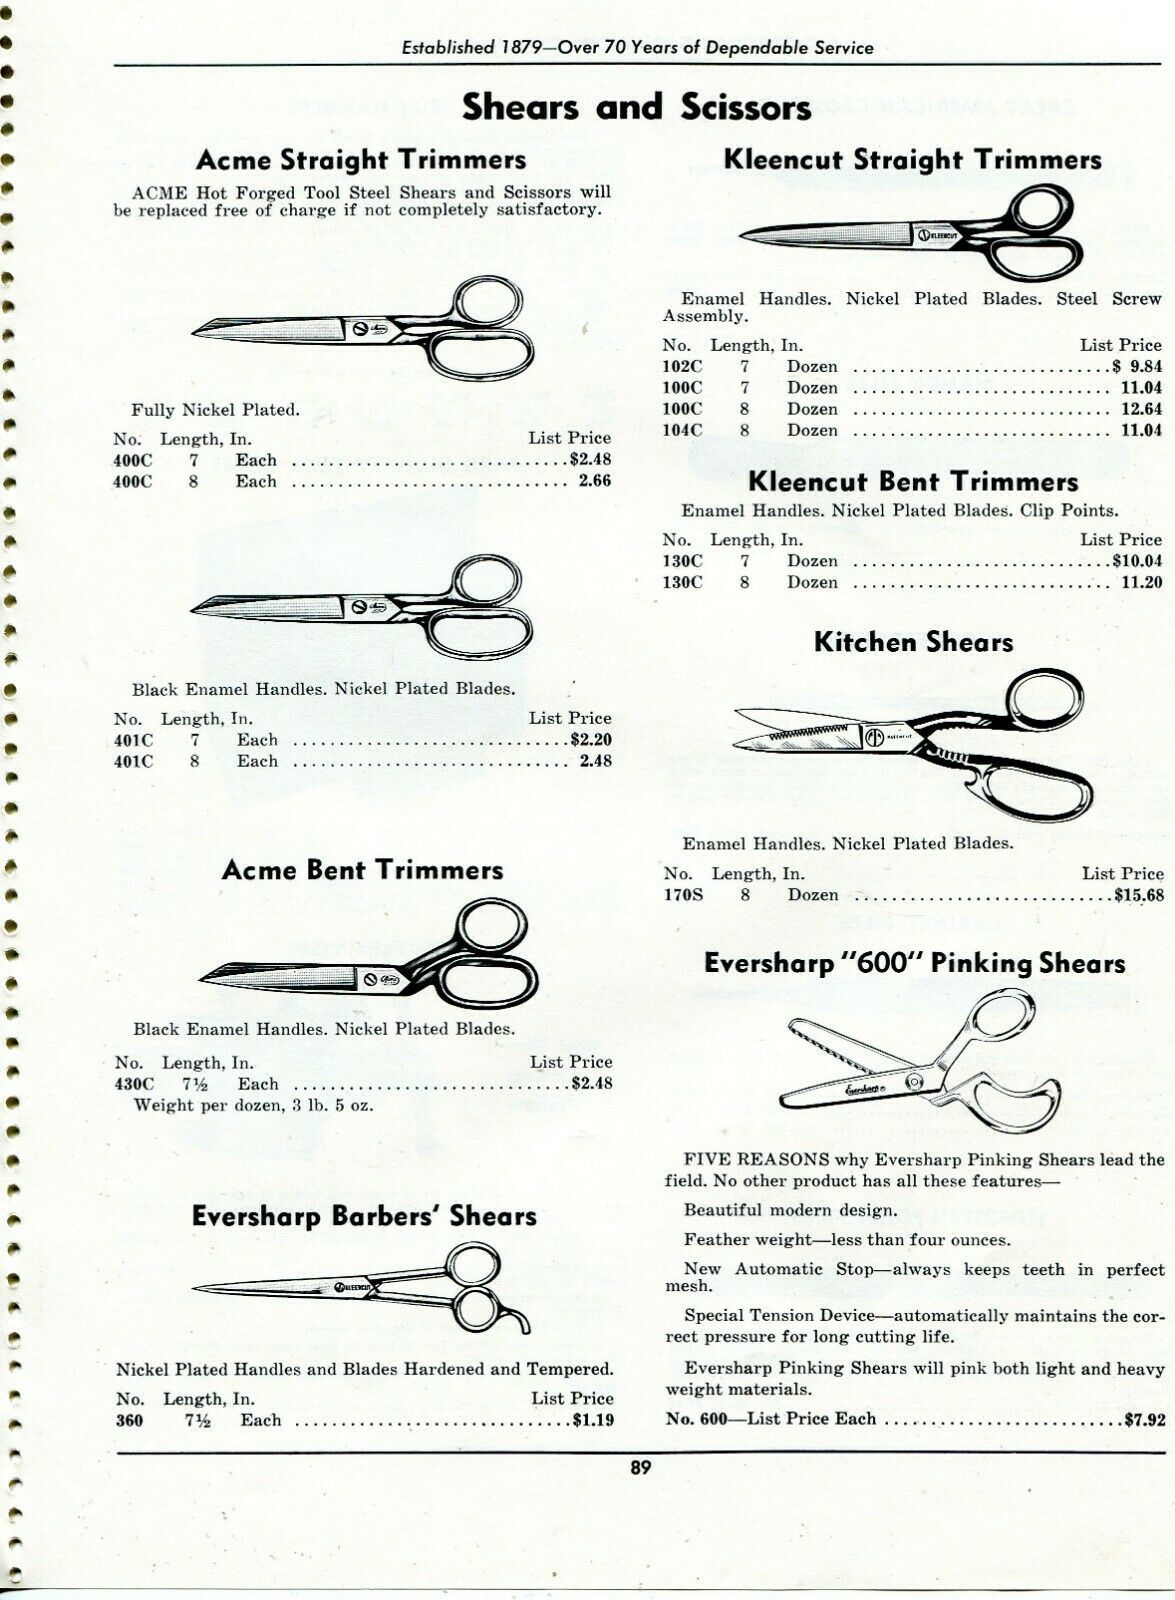 1950 Print Ad Of Shears & Scissors Acme, Kleencut, Eversharp